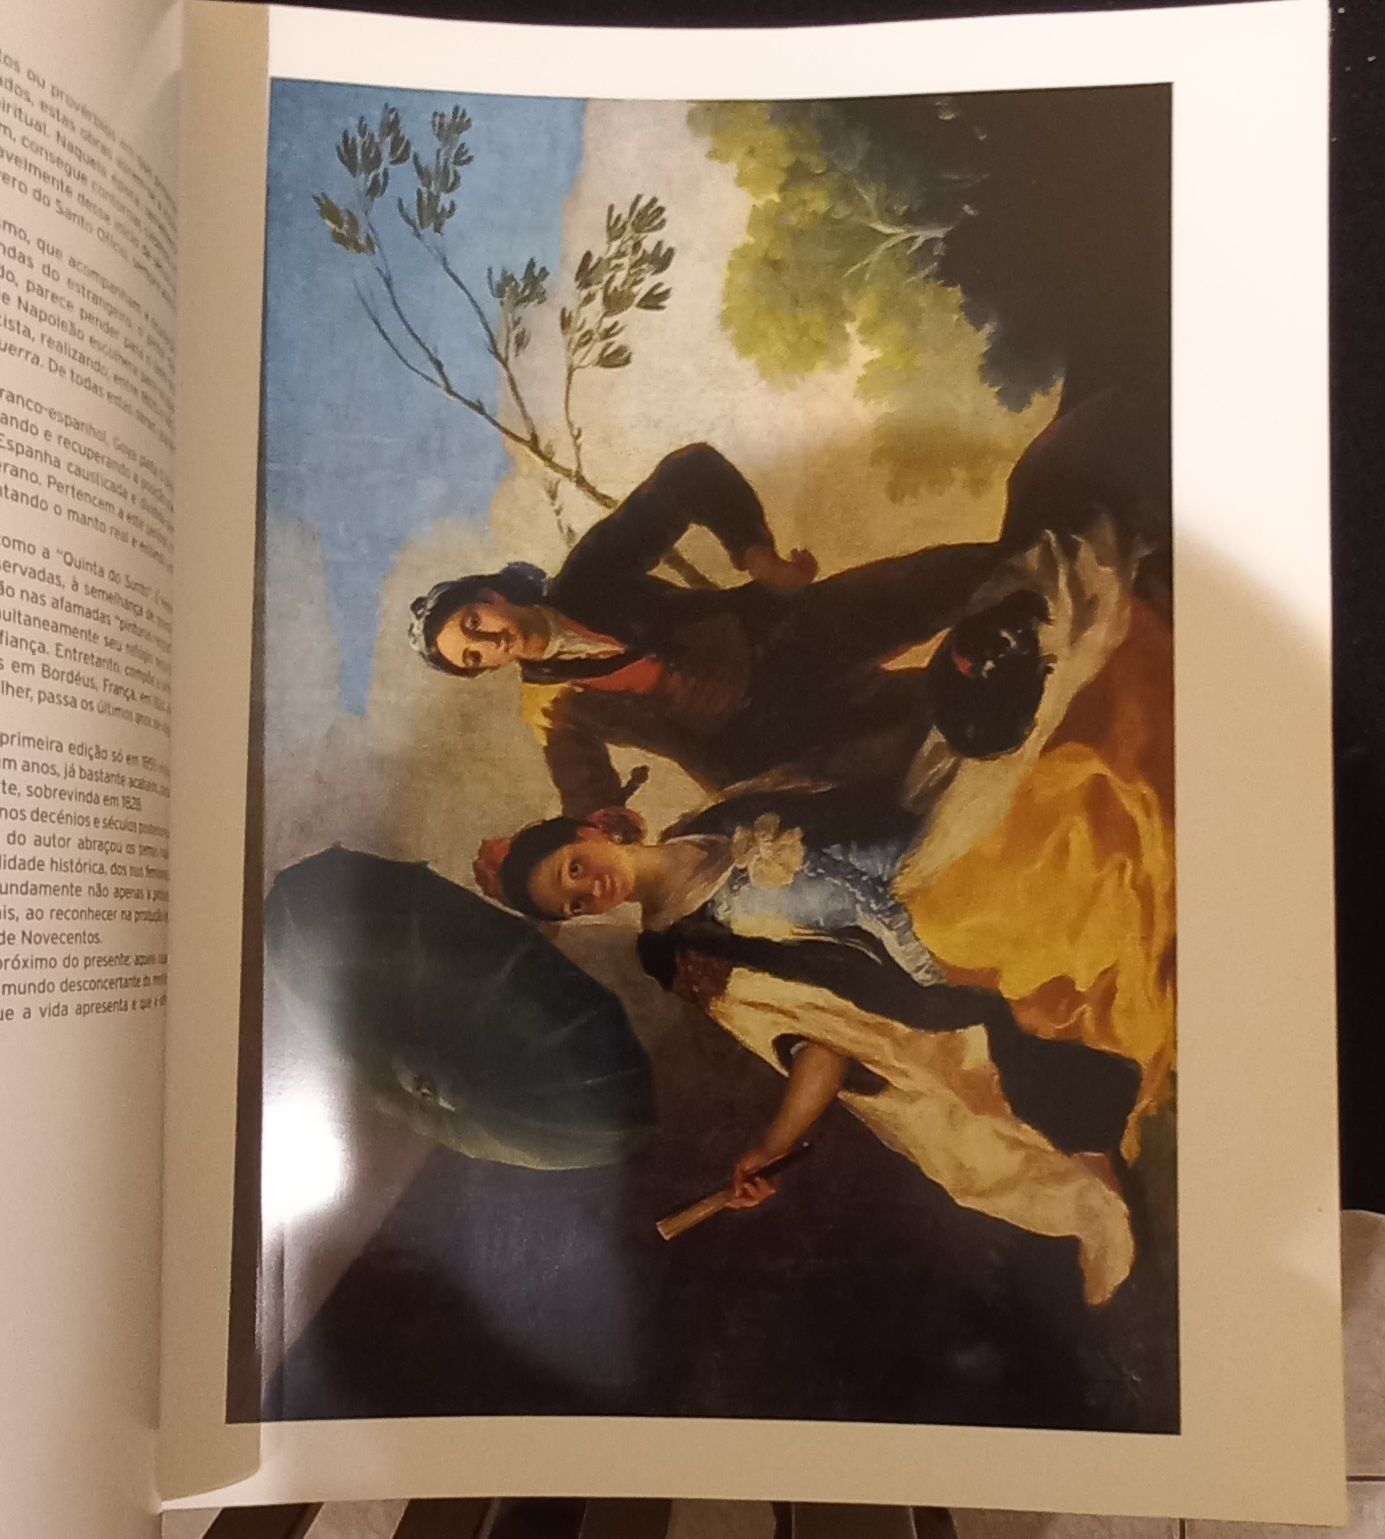 Portefólio de Francisco de Goya